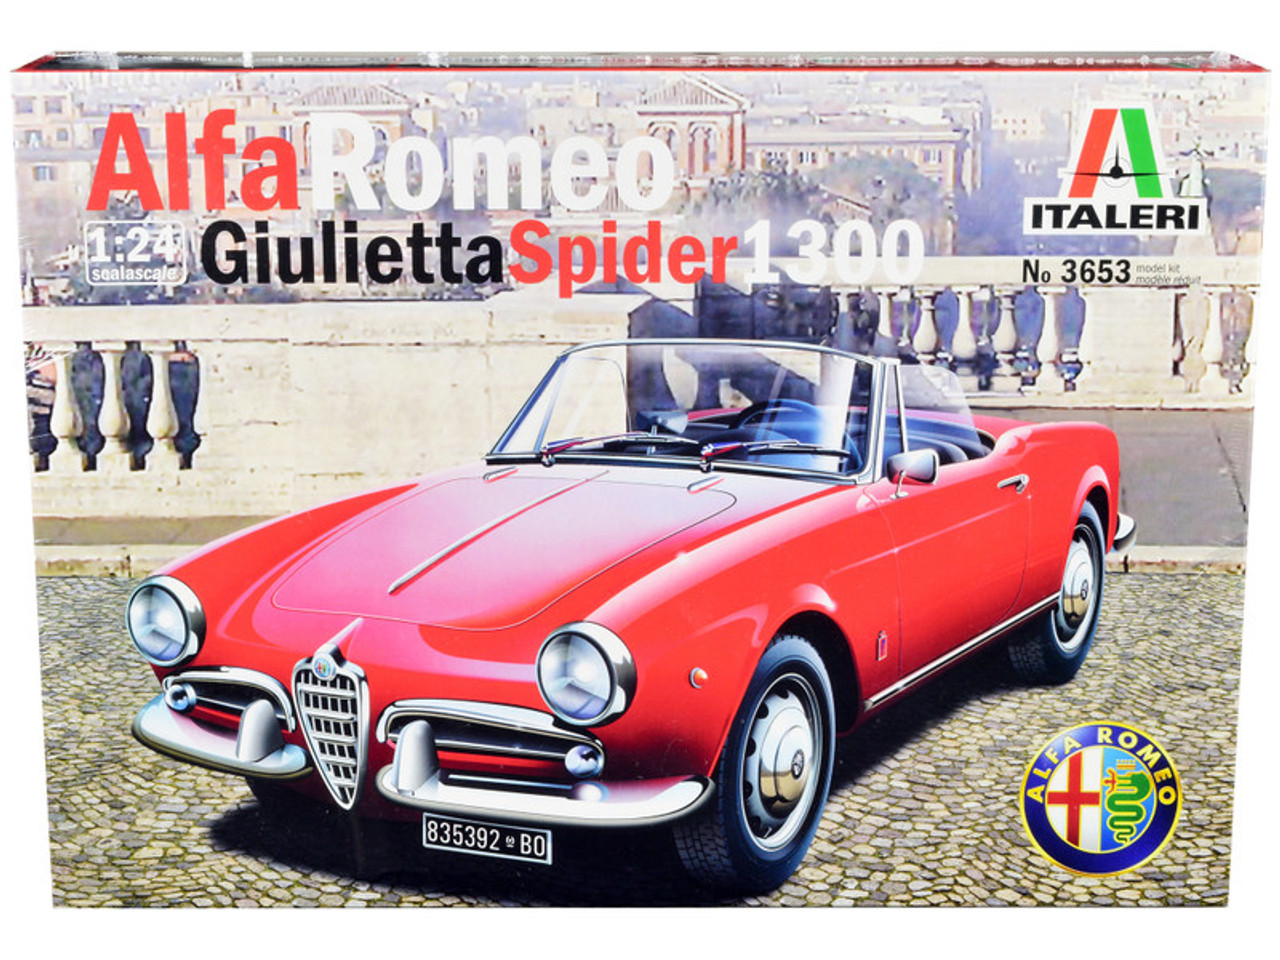 Skill 3 Model Kit Alfa Romeo Guilietta Spider 1300 1/24 Scale Model by Italeri